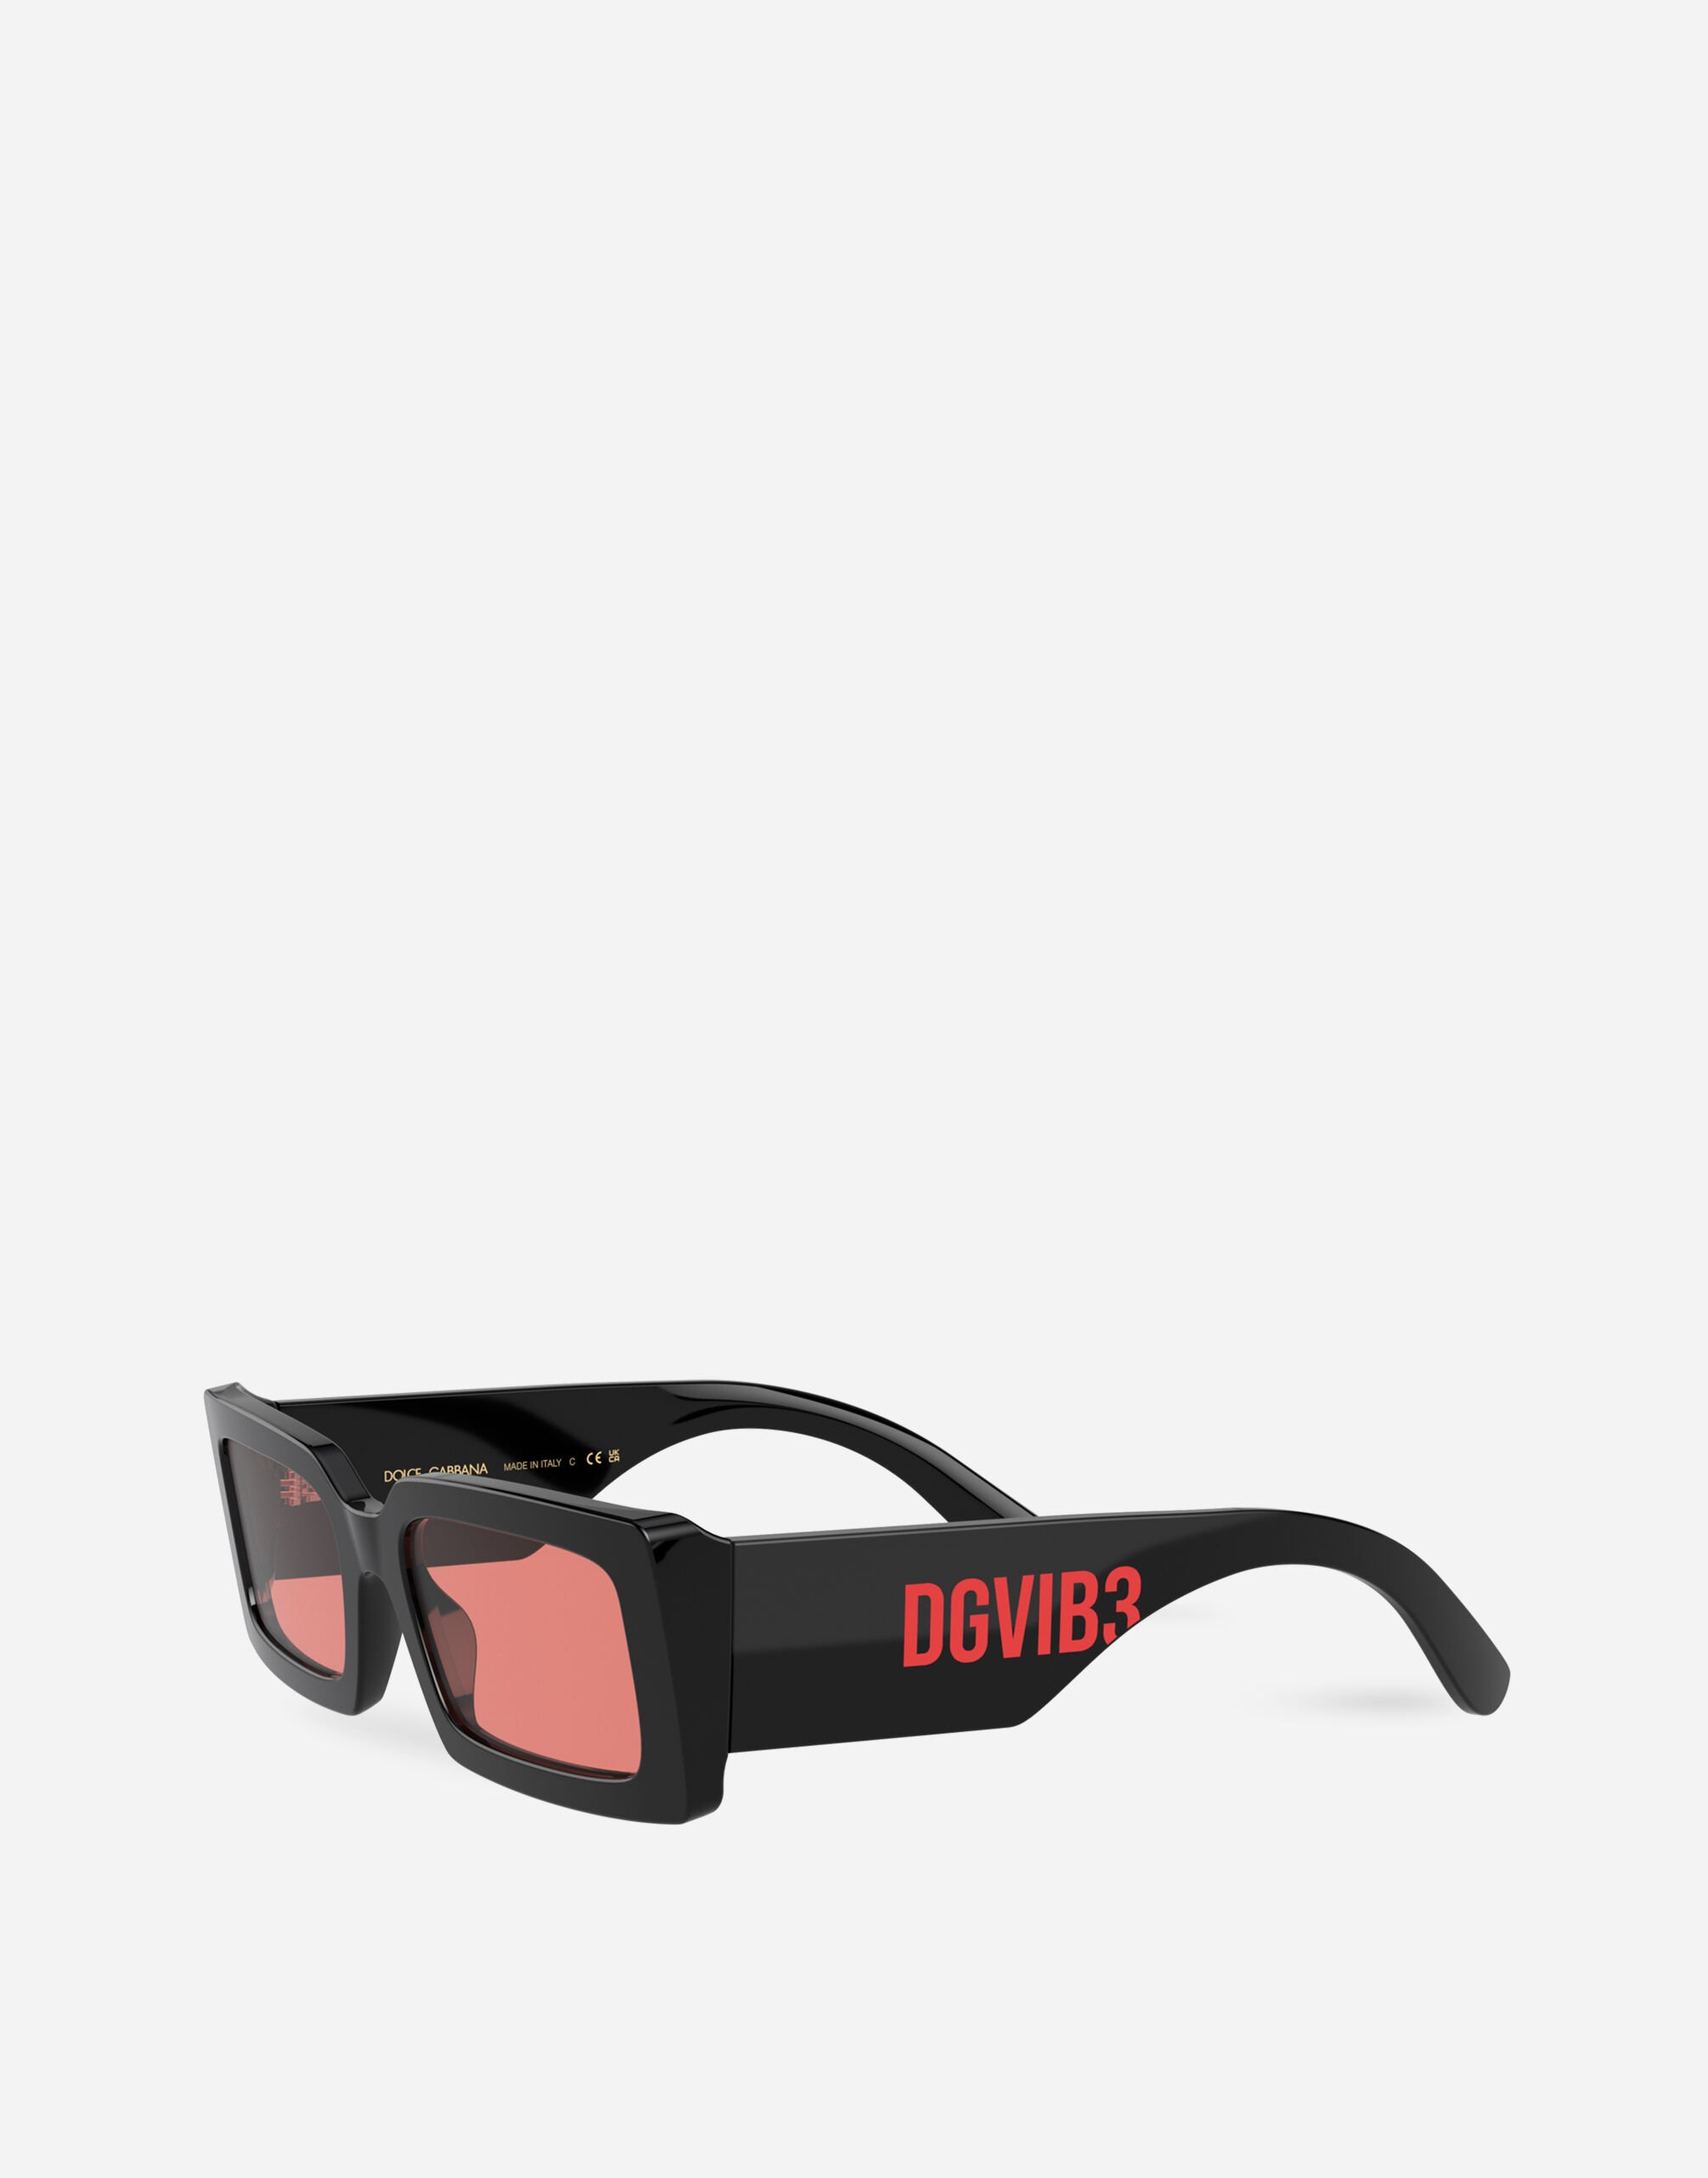 Dolce & Gabbana DG VIB3 Sunglasses Black F9R72ZGH095